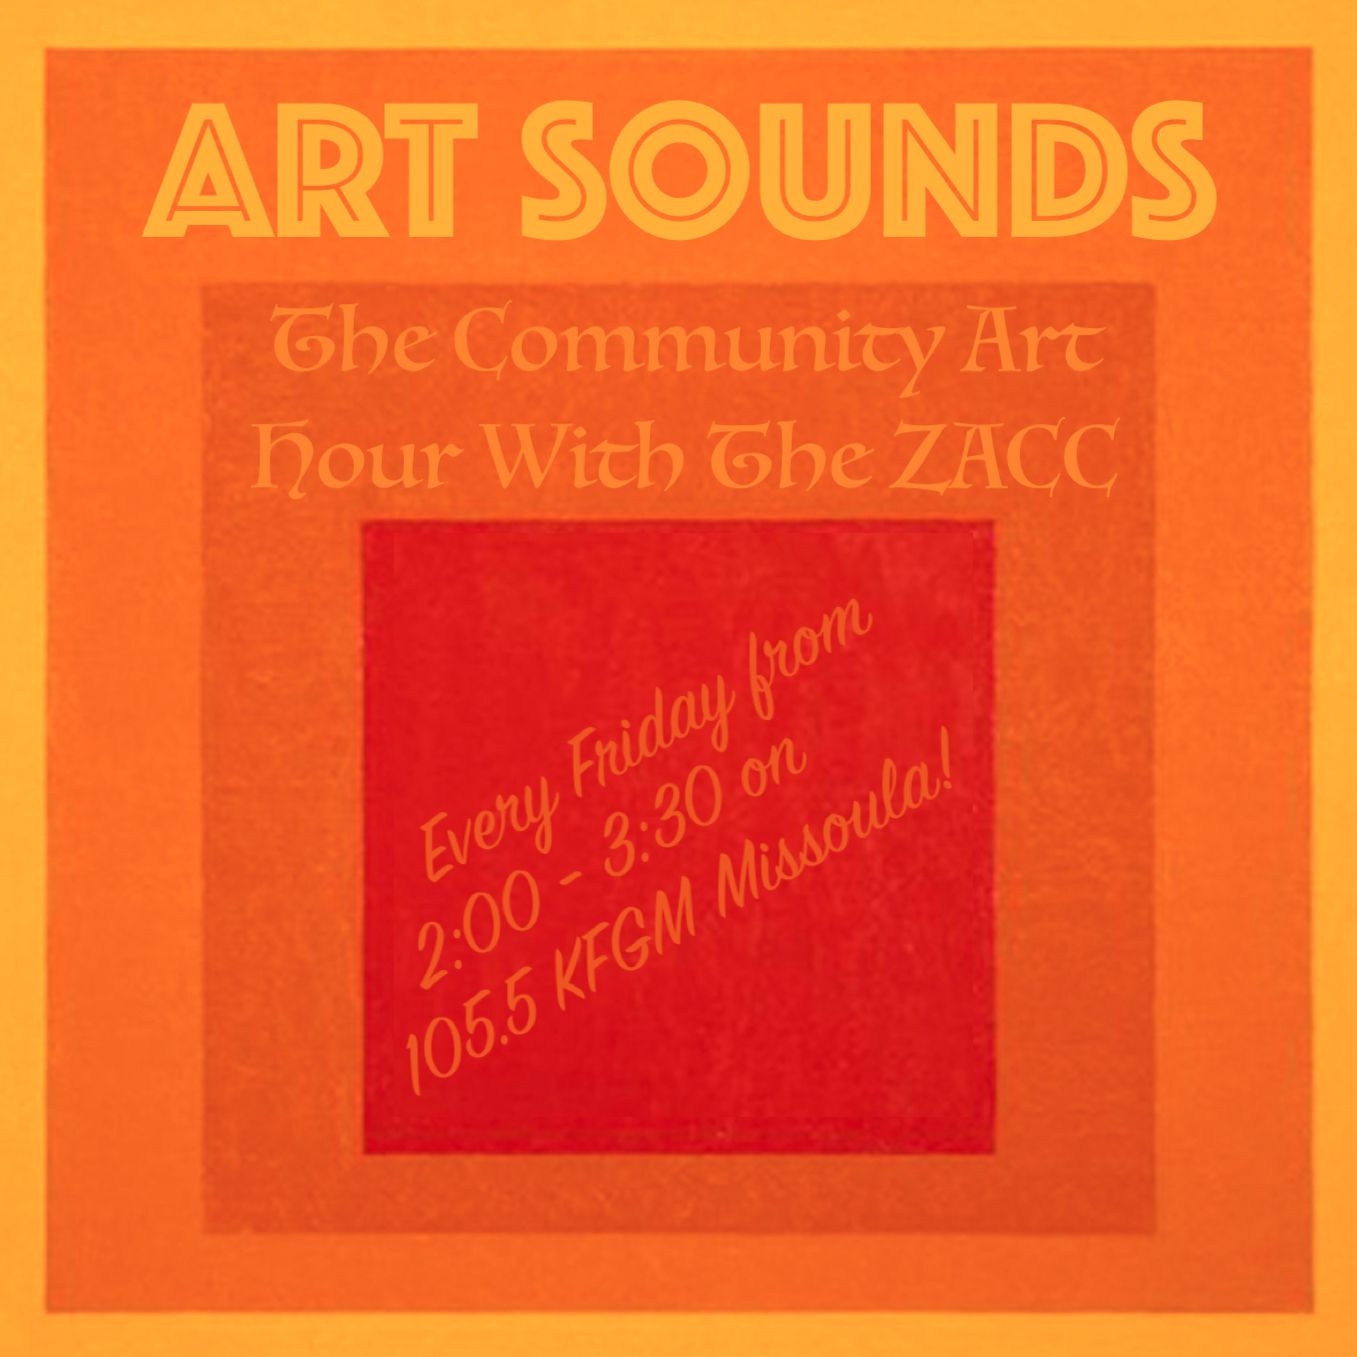 ART SOUNDS: The Community Art Hour w/ The ZACC